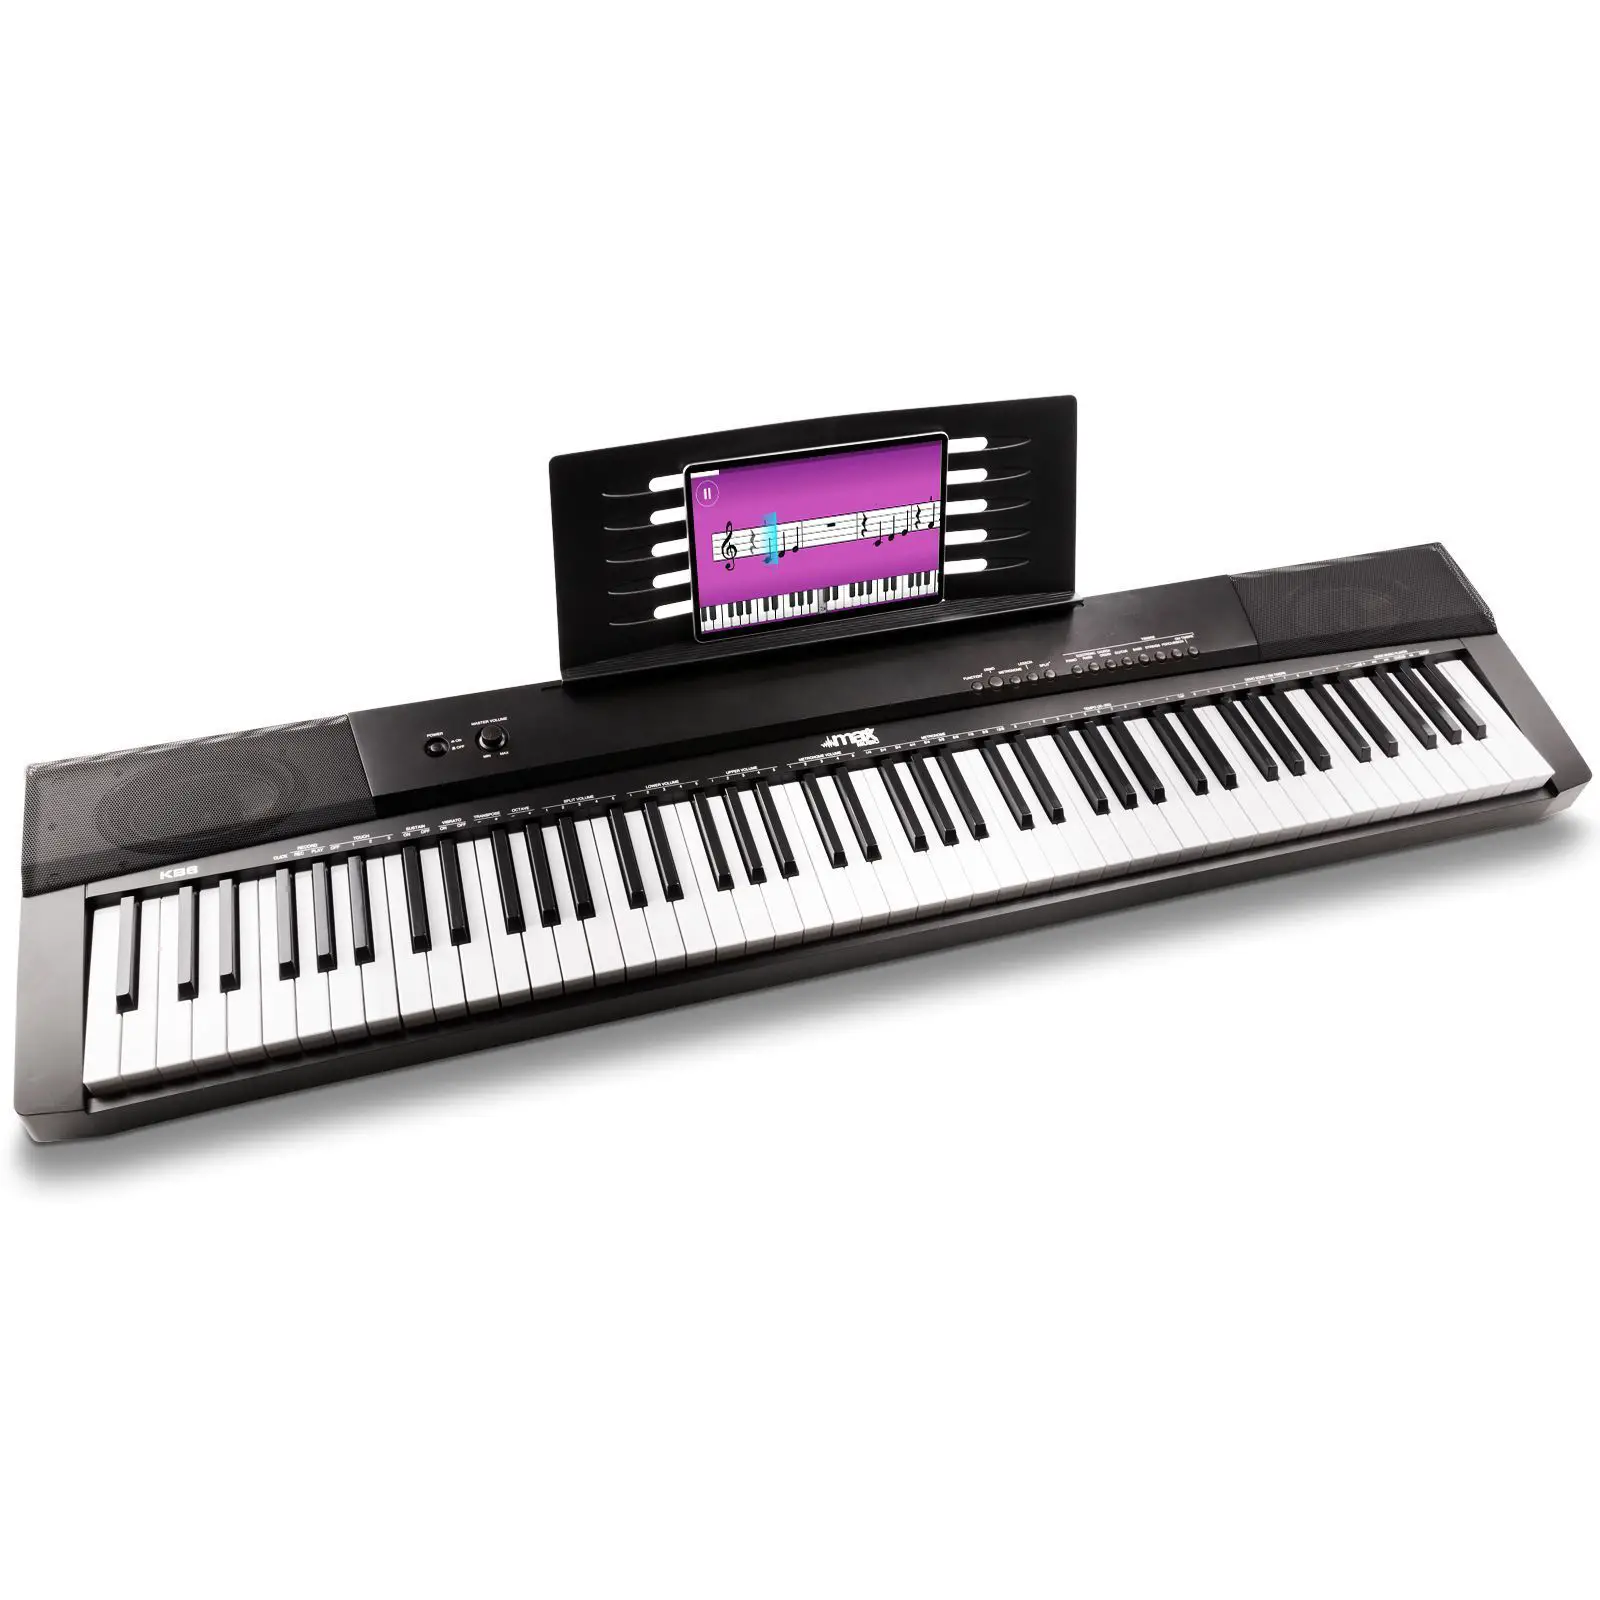 Retourdeal - MAX KB6 digitale piano met 88 aanslaggevoelige toetsen en